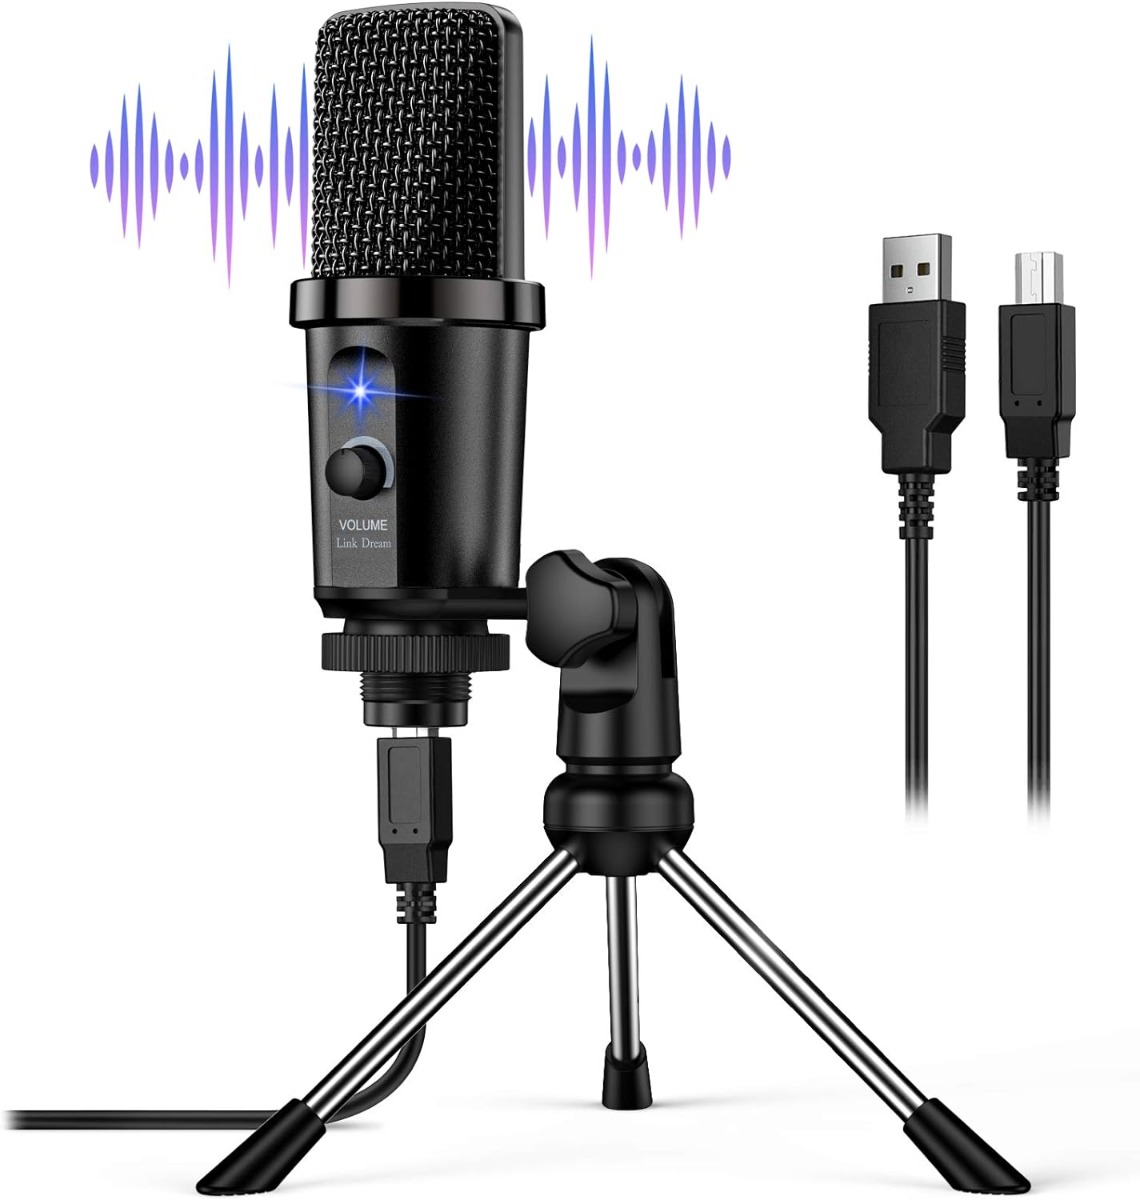 Link Dream USB Condenser Microphone